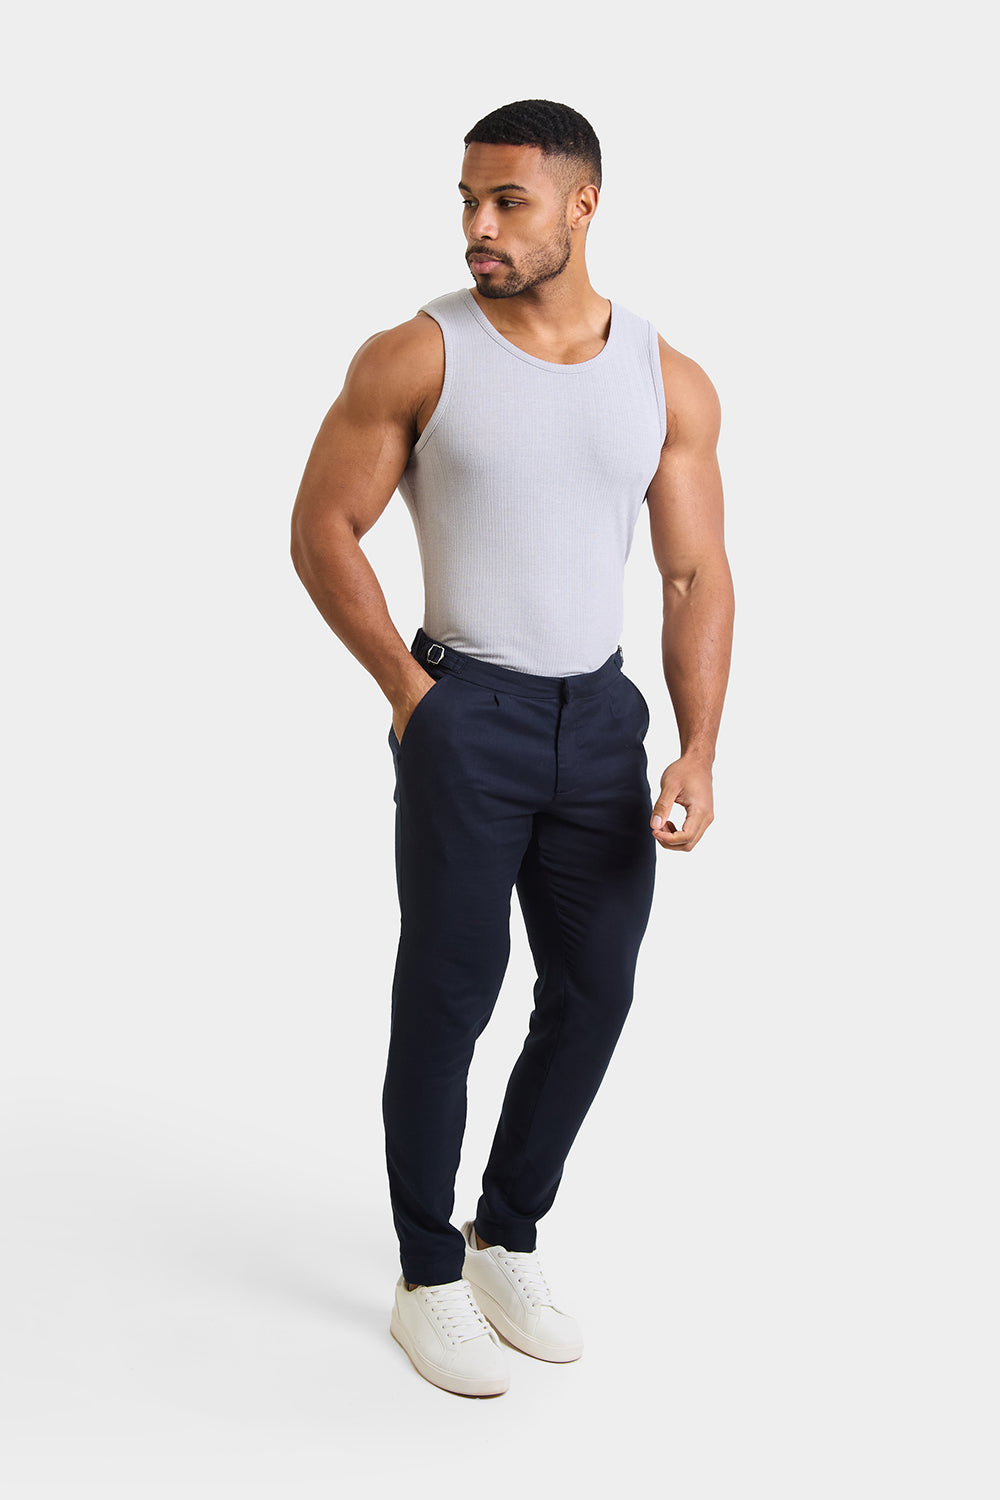 Linen-Blend Crop Top & Pants Set | Crop top pants set, Top pants set,  Clothes for women